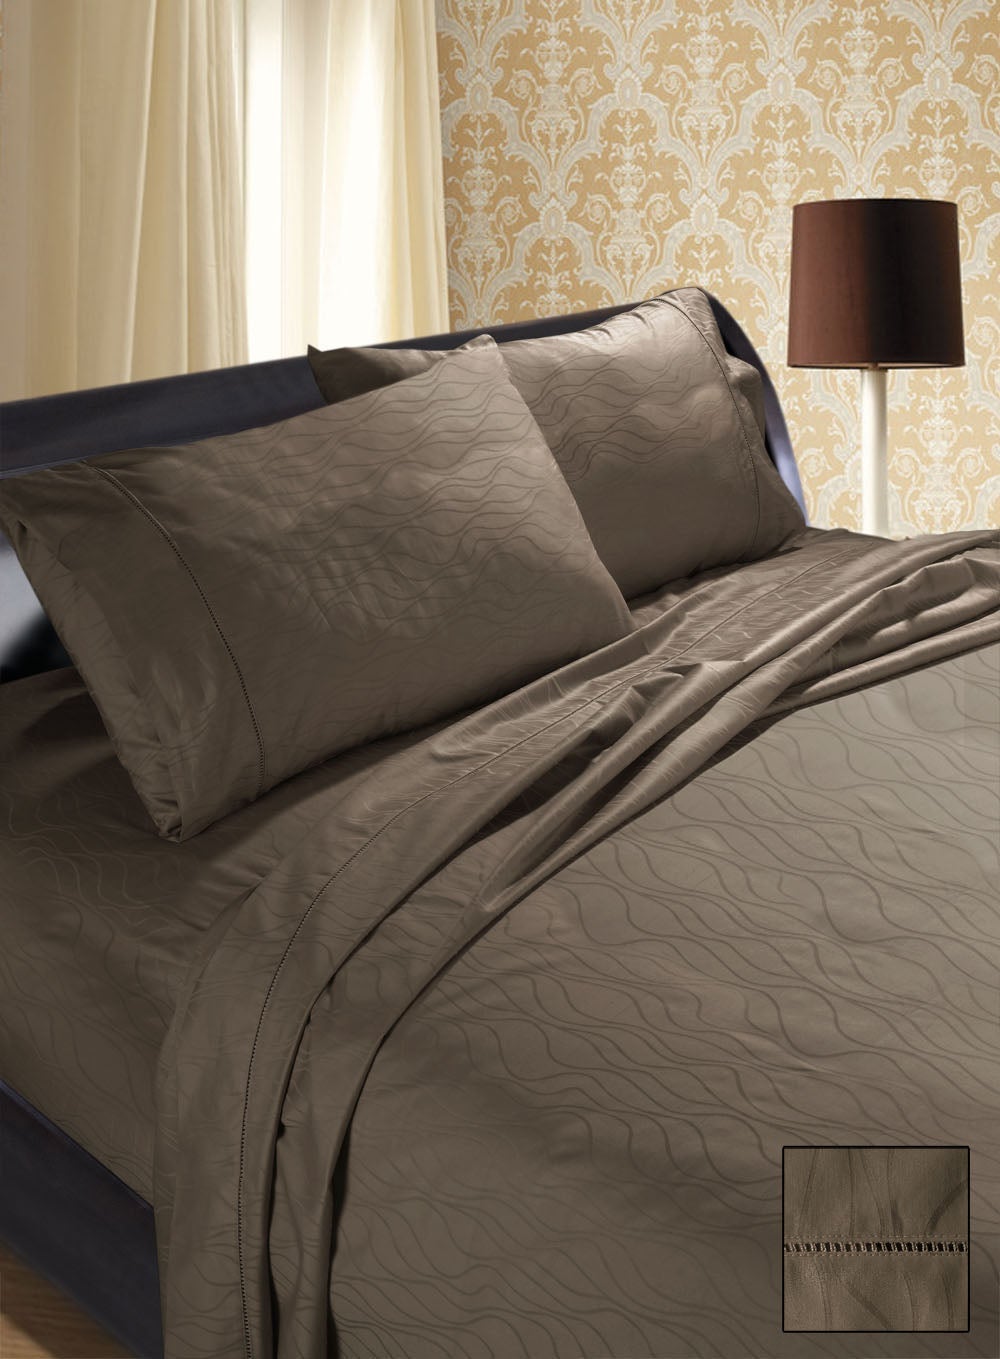 Shangri-La Linen luxury Hotel Collection 100% Egyptian cotton Jacquard sateen finish sheet set 1200tc